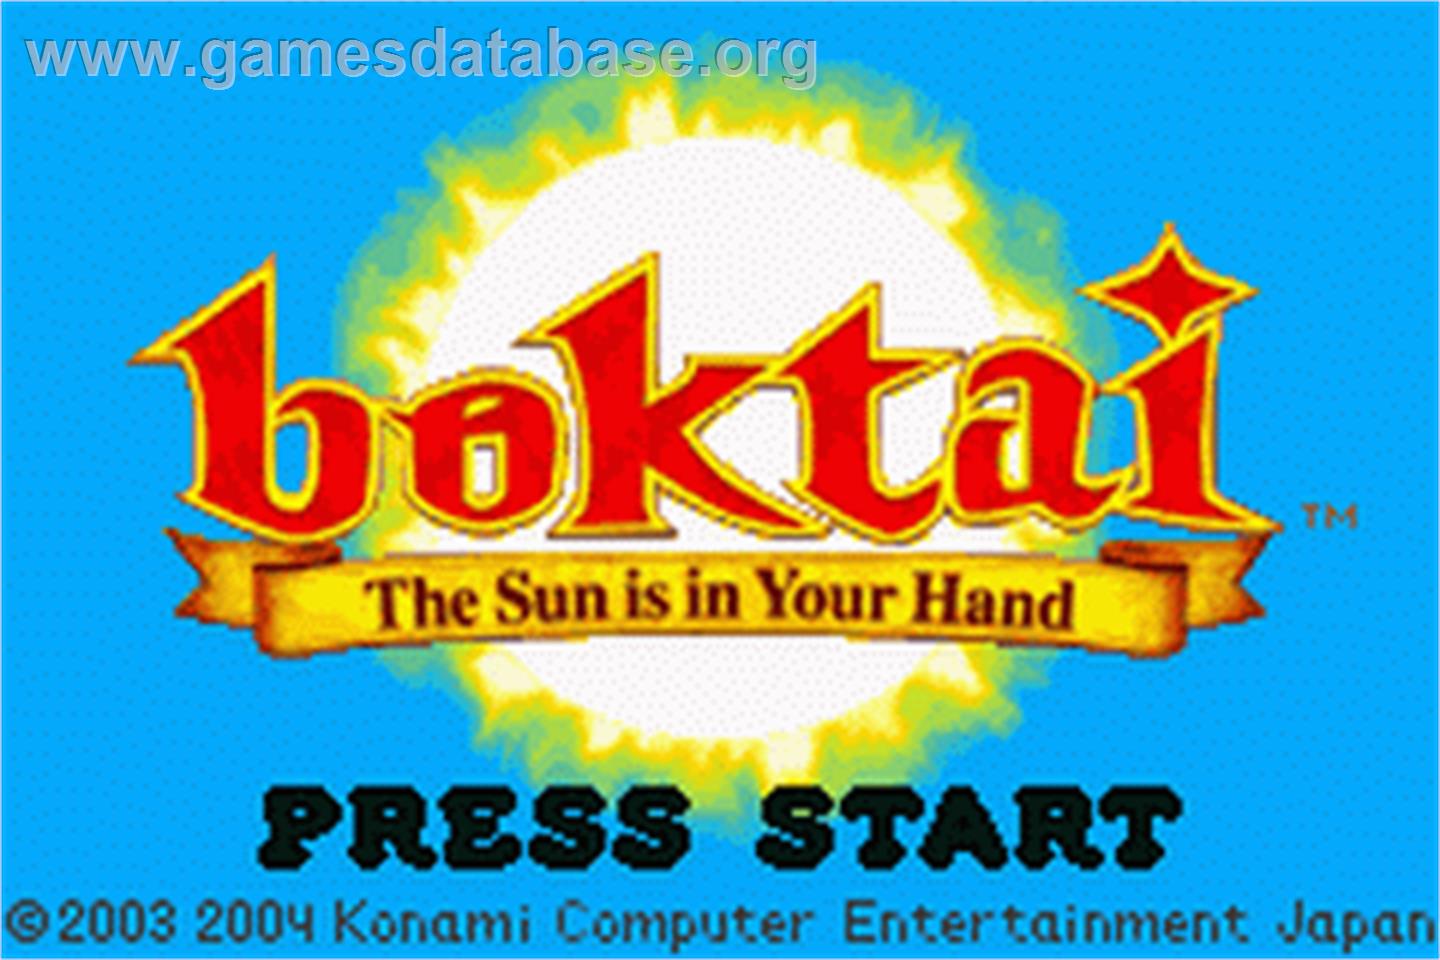 Boktai: The Sun is in Your Hand - Nintendo Game Boy Advance - Artwork - Title Screen